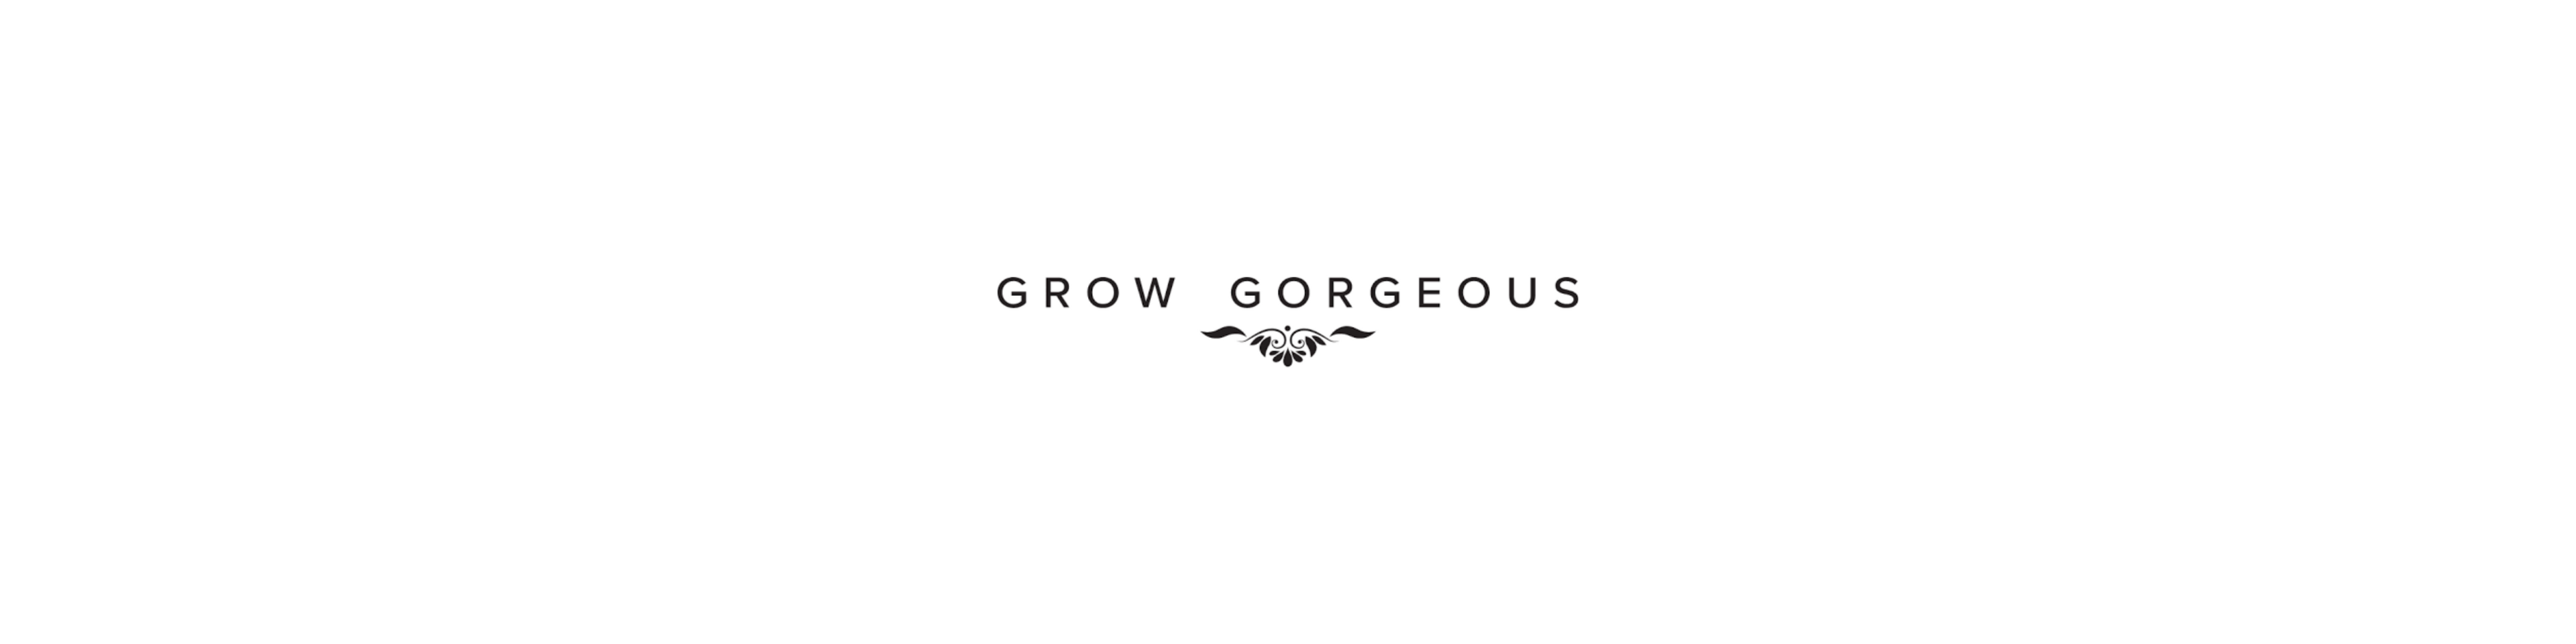 Grow Gorgeous (In promozione)